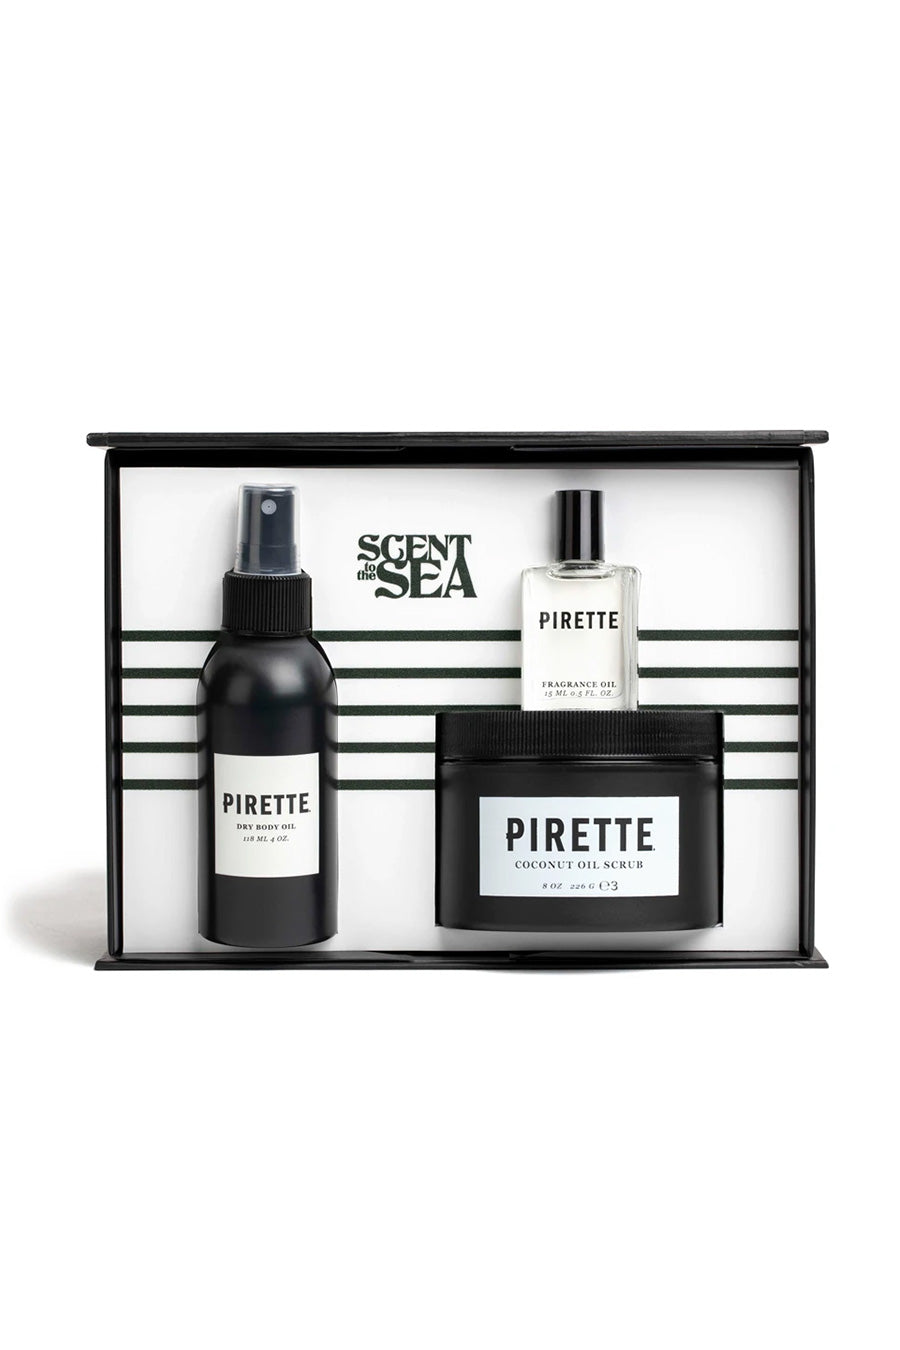 Pirette Gift Box - Main Image Number 1 of 4